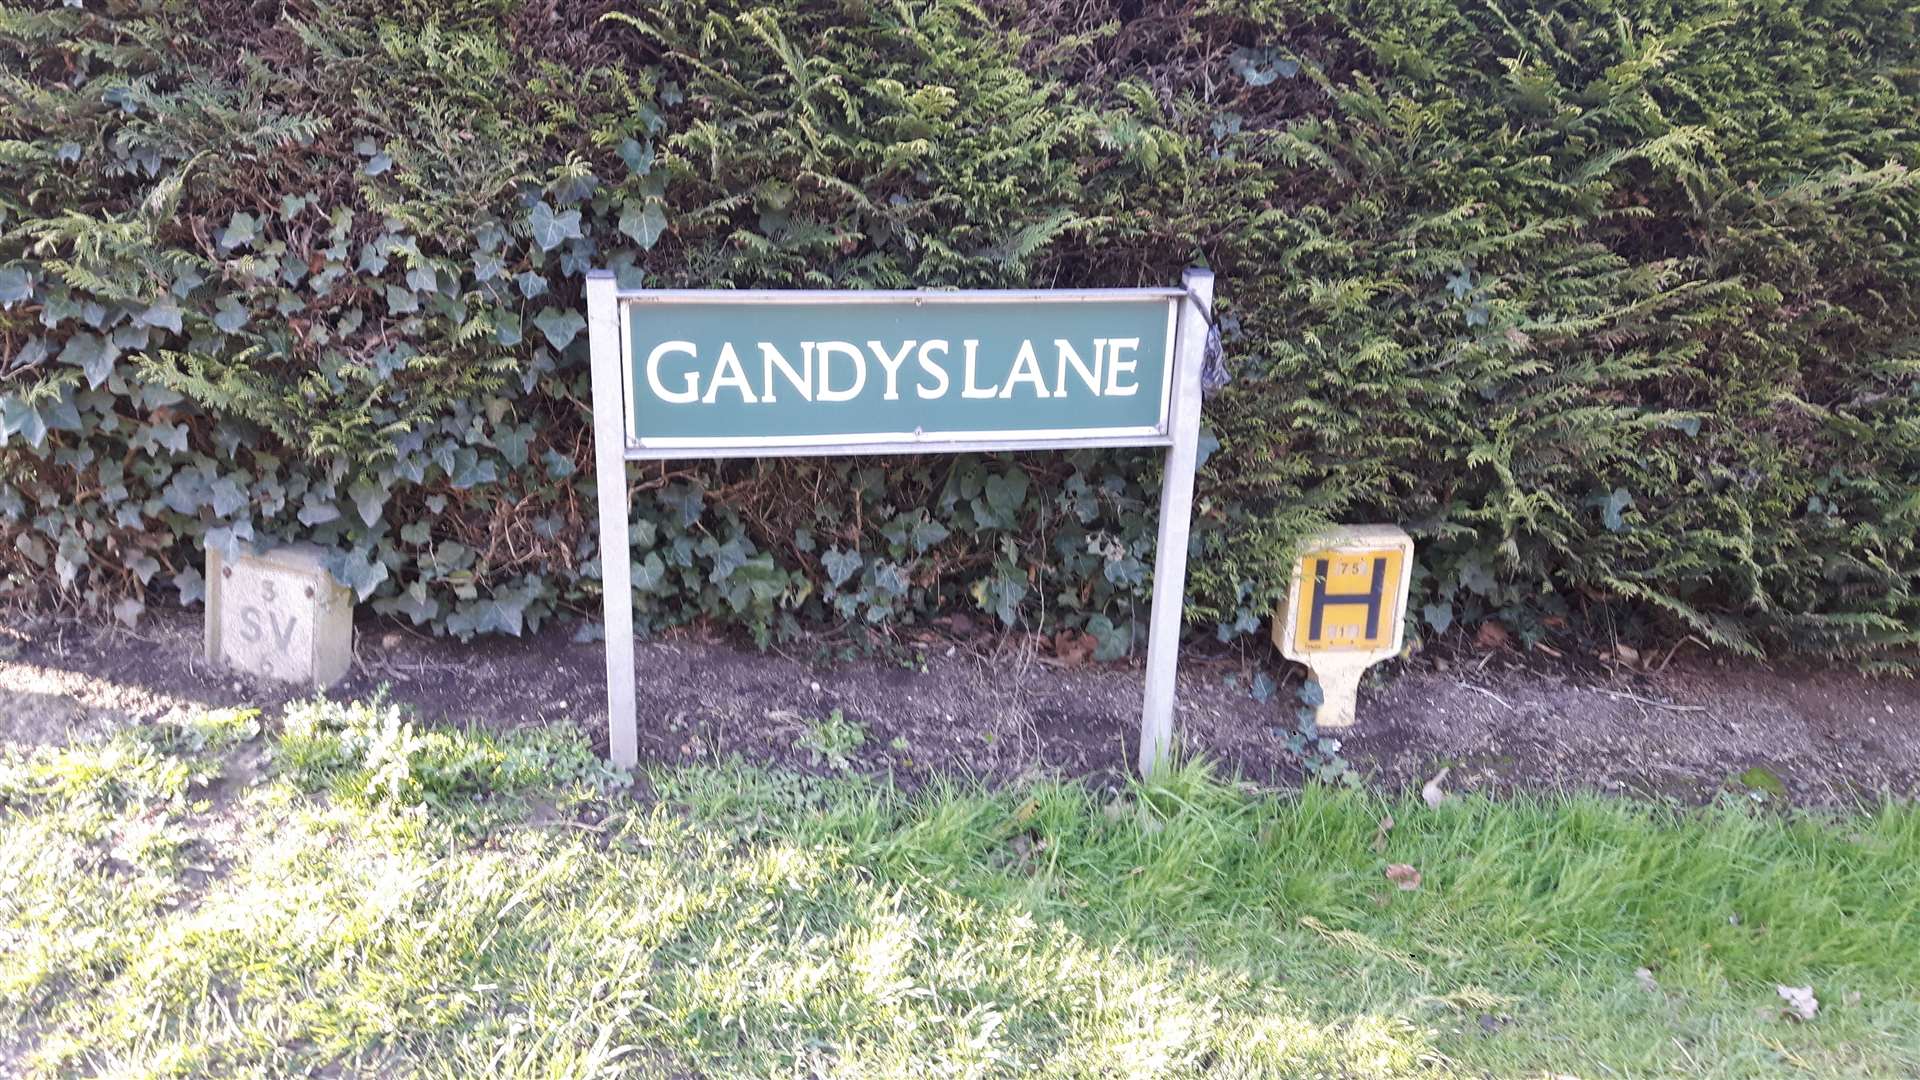 Gandy's Lane in Boughton Monchelsea